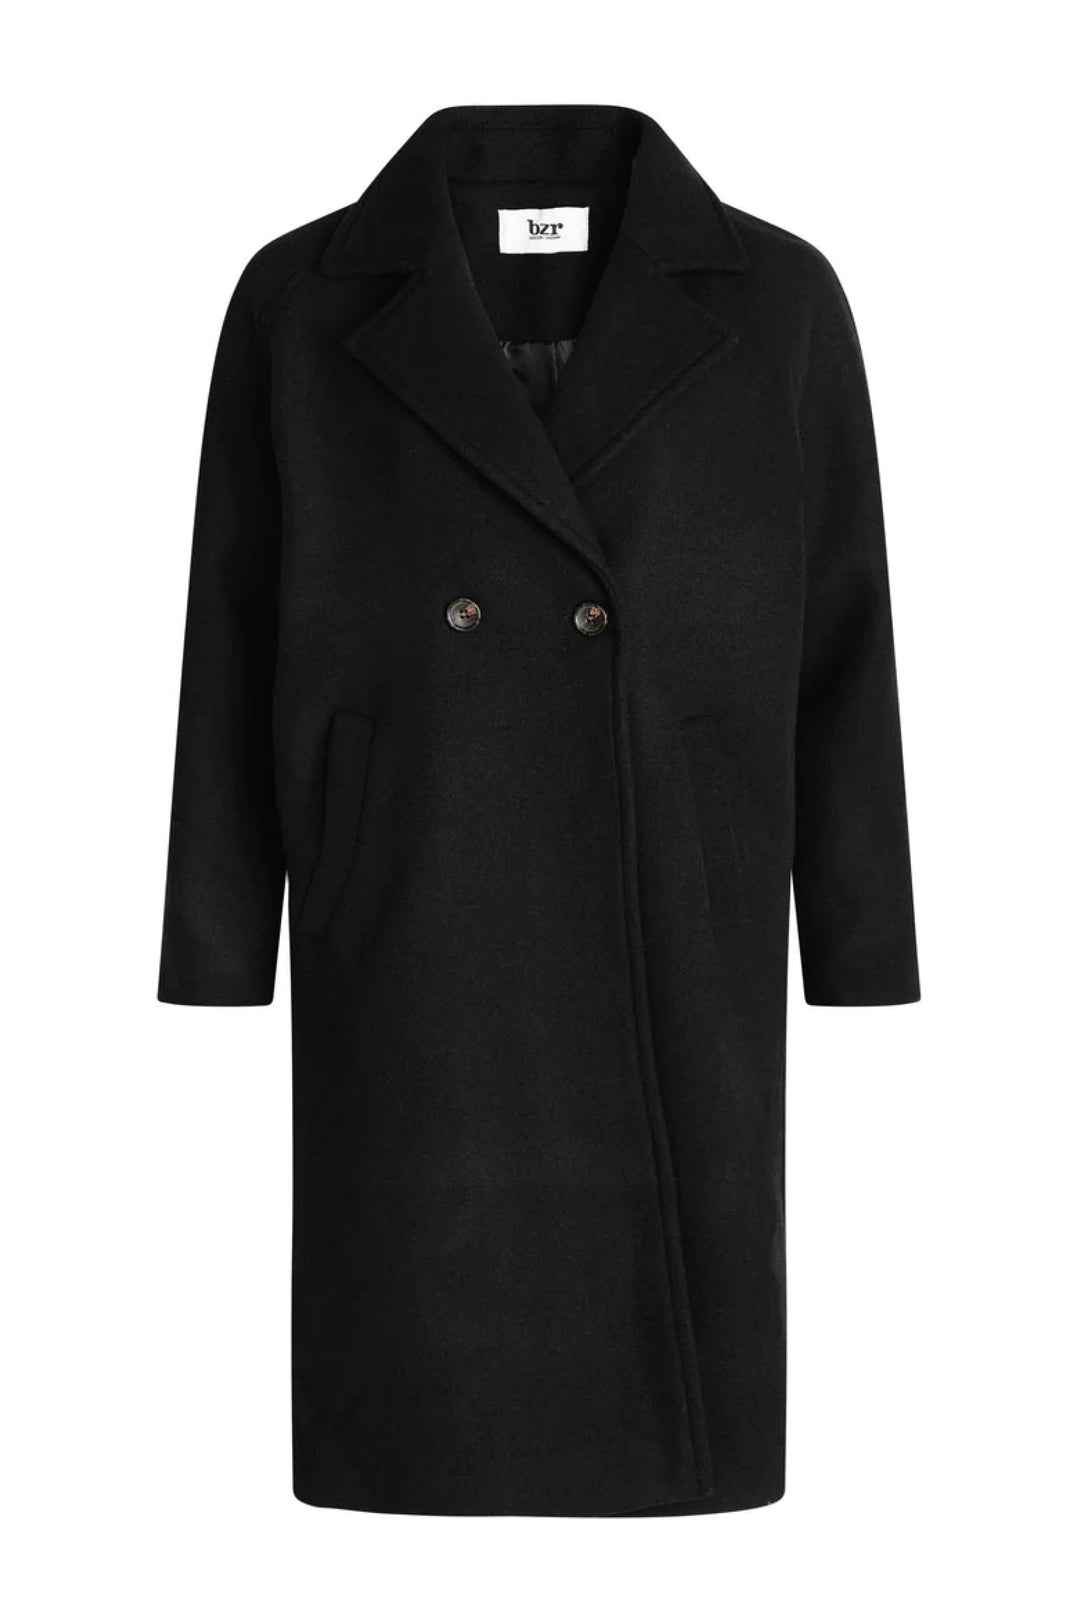 BZR WaciBZRebecca coat Outerwear Black